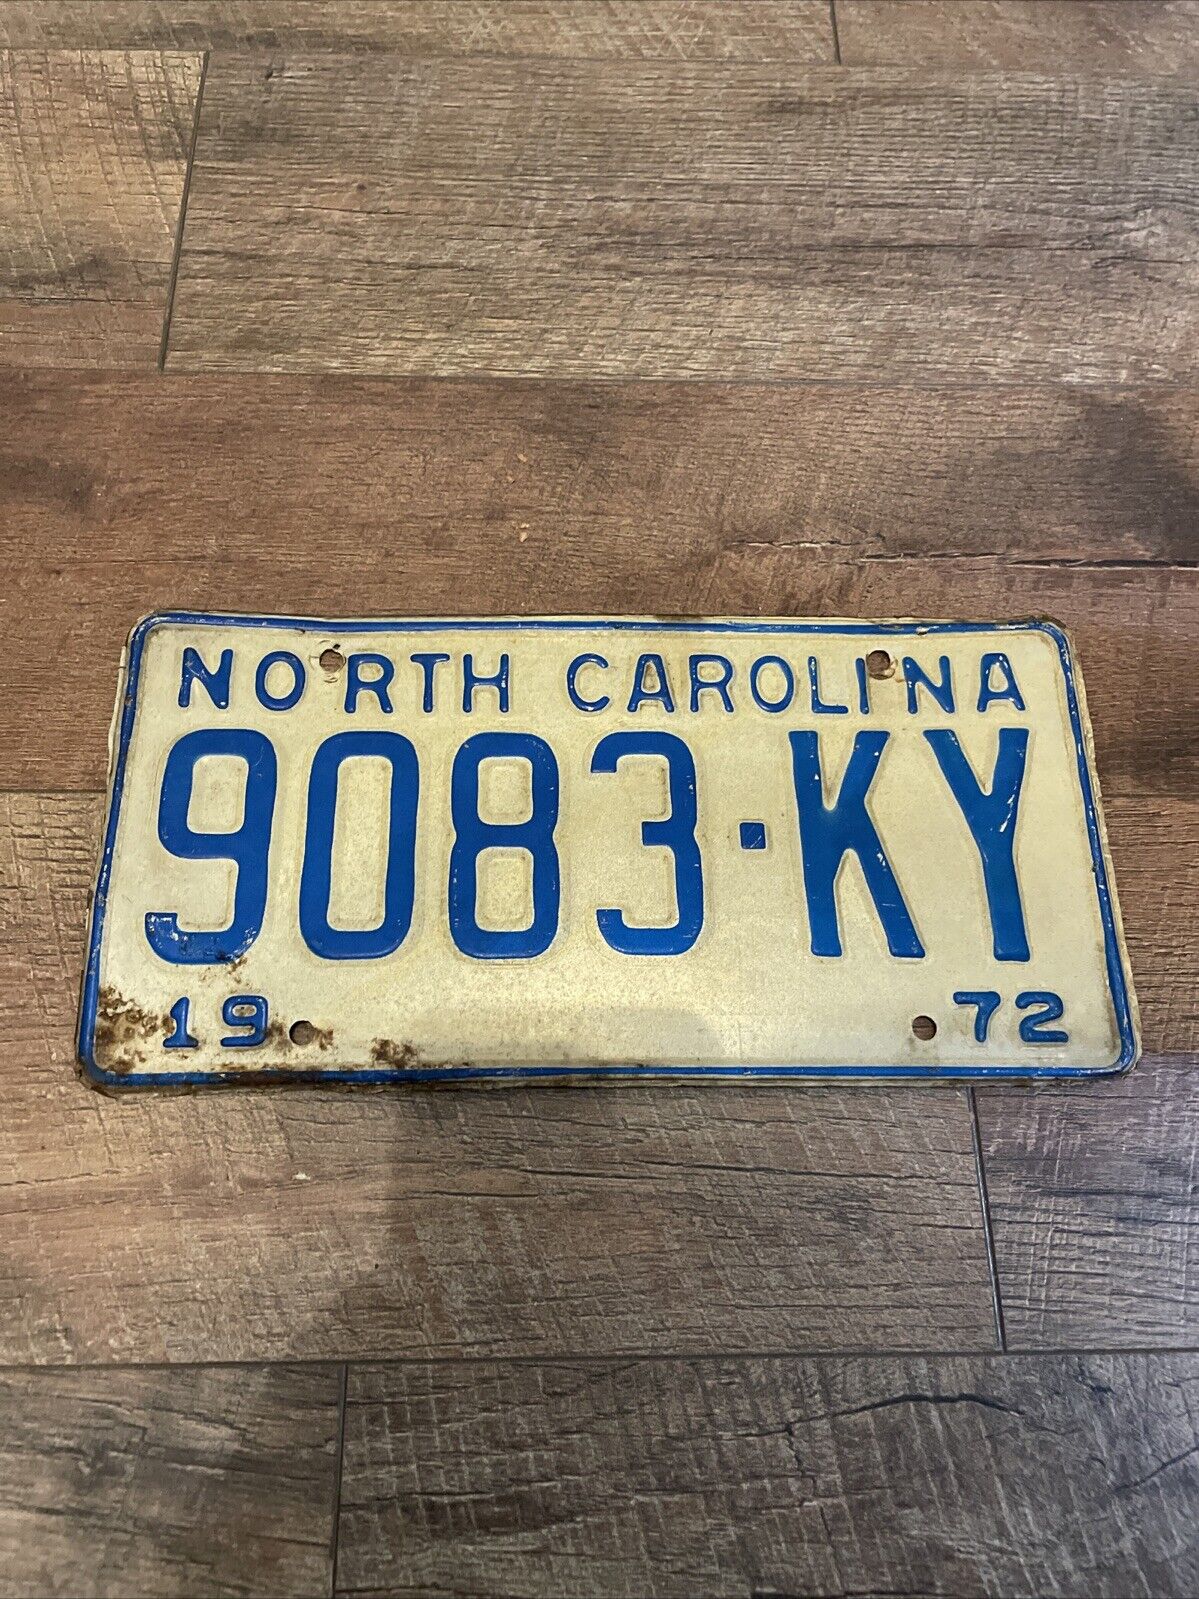 1972 North Carolina Truck License Plate - “9083-KY”